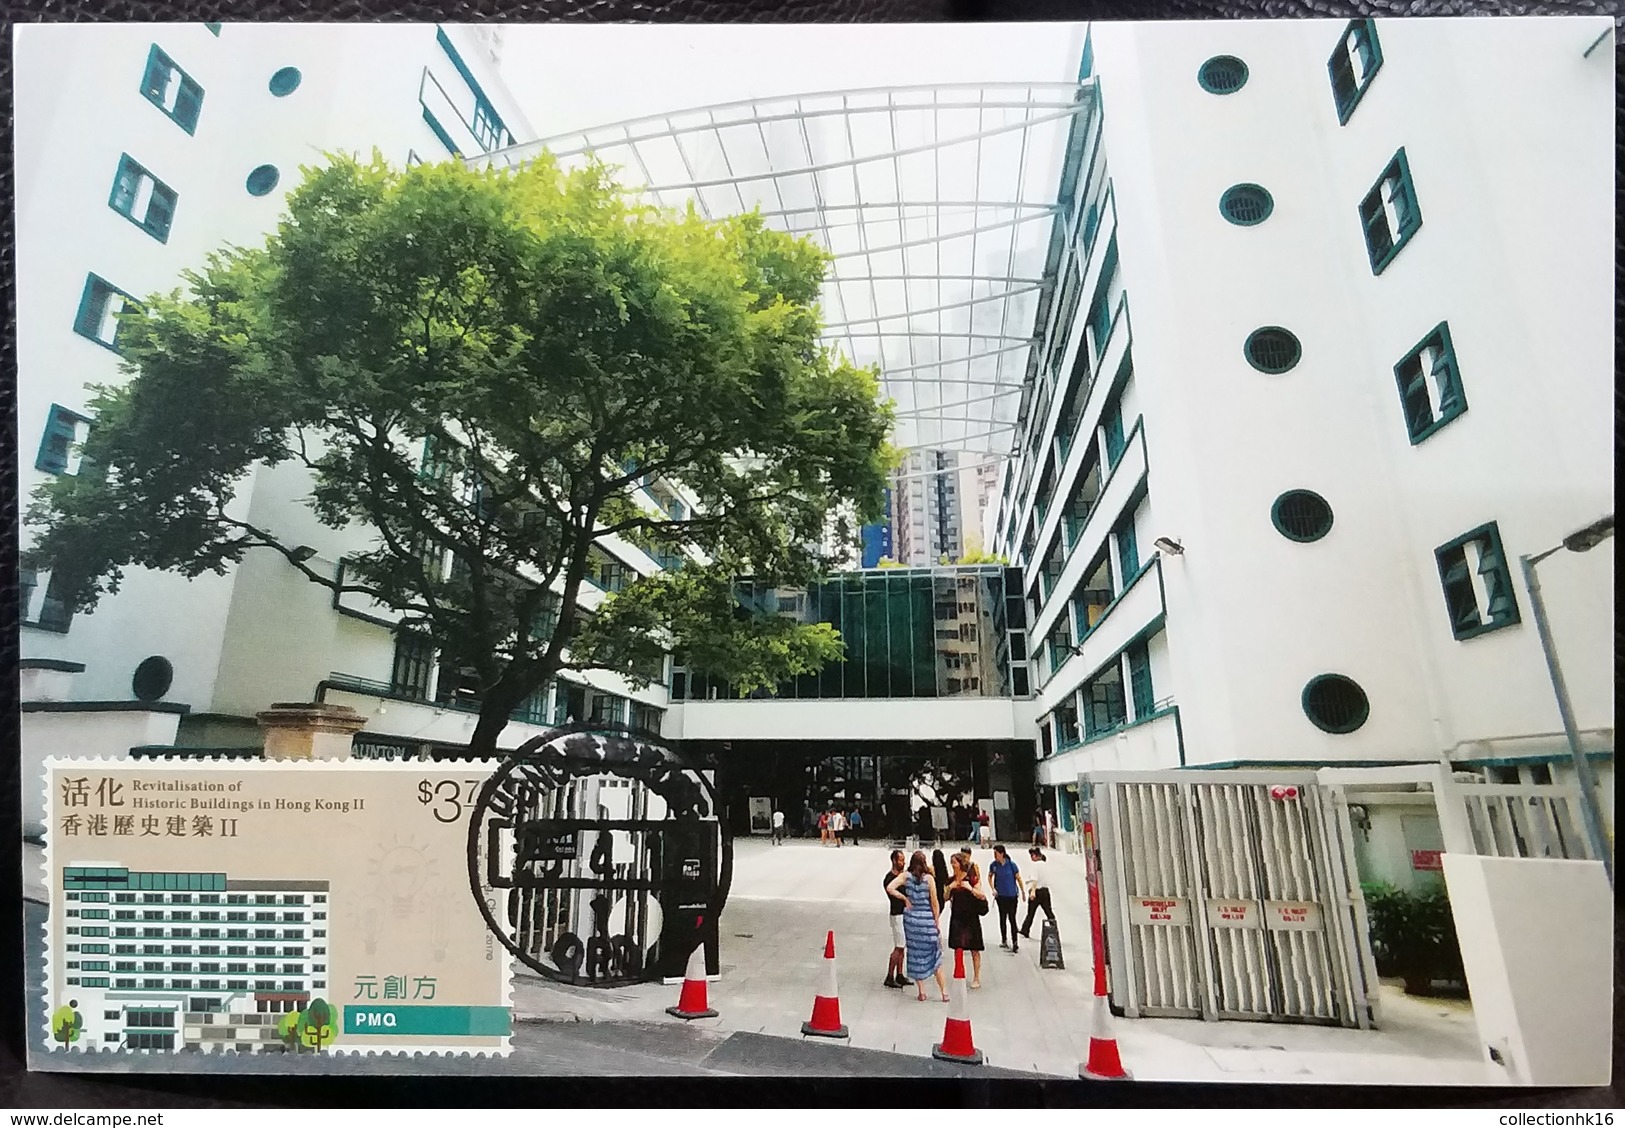 Revitalisation of Historic Buildings in Hong Kong II 2017 Hong Kong Maximum card MC Set (Location Postmark) (6 cards)